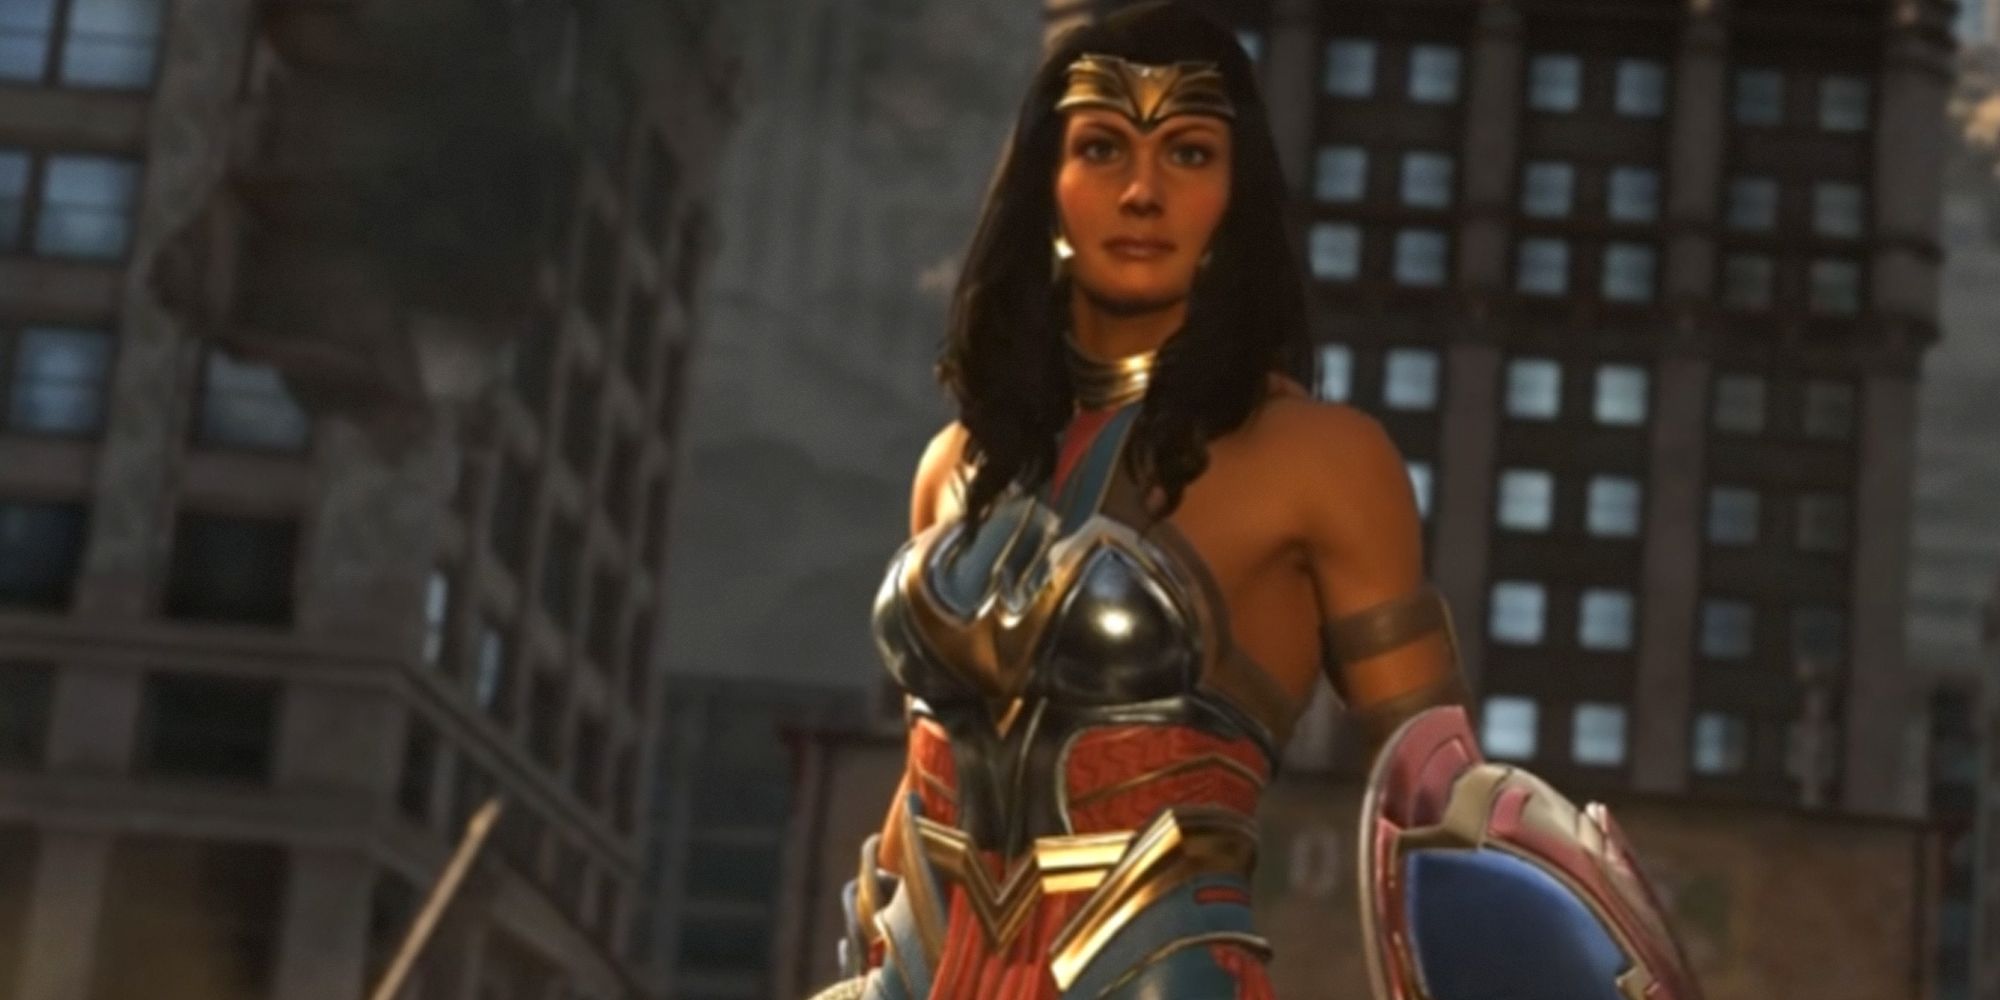 Wonder Woman cutscene in Injustice 2 story mode.